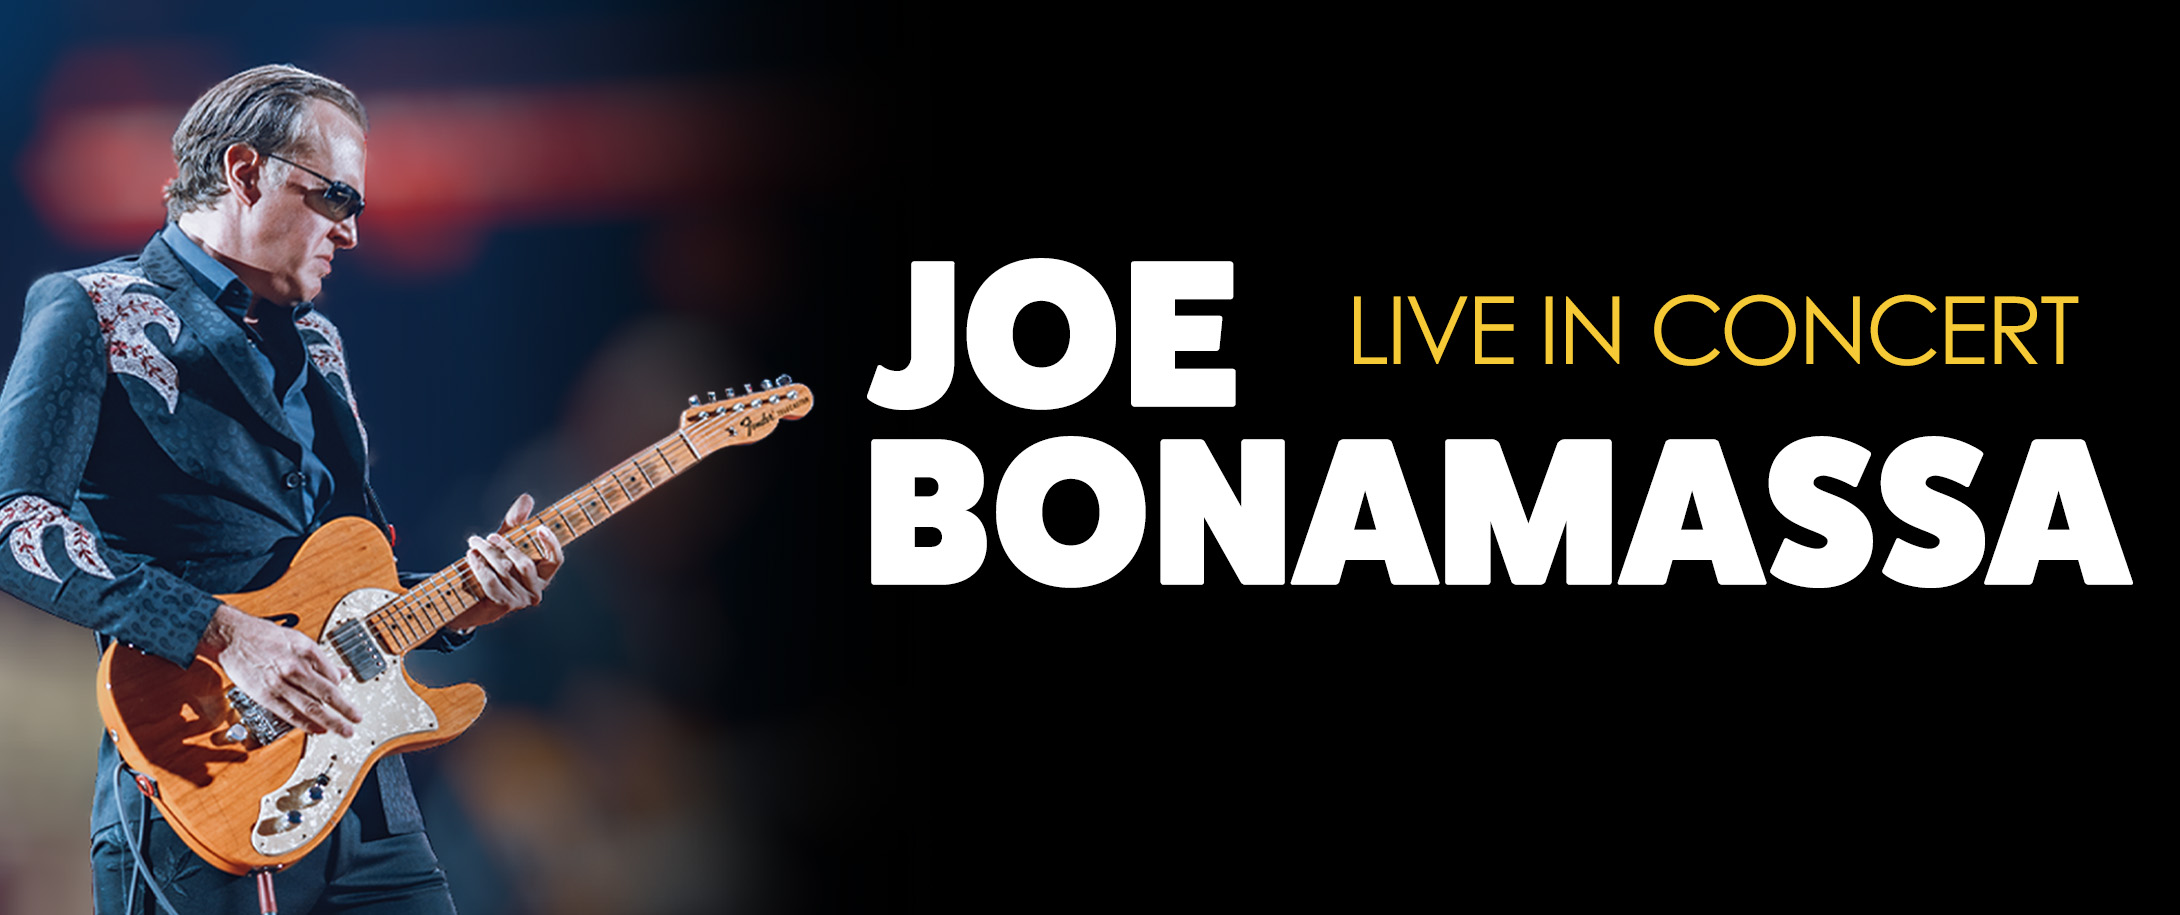 Joe Bonamassa – The Guitar Event of the Year